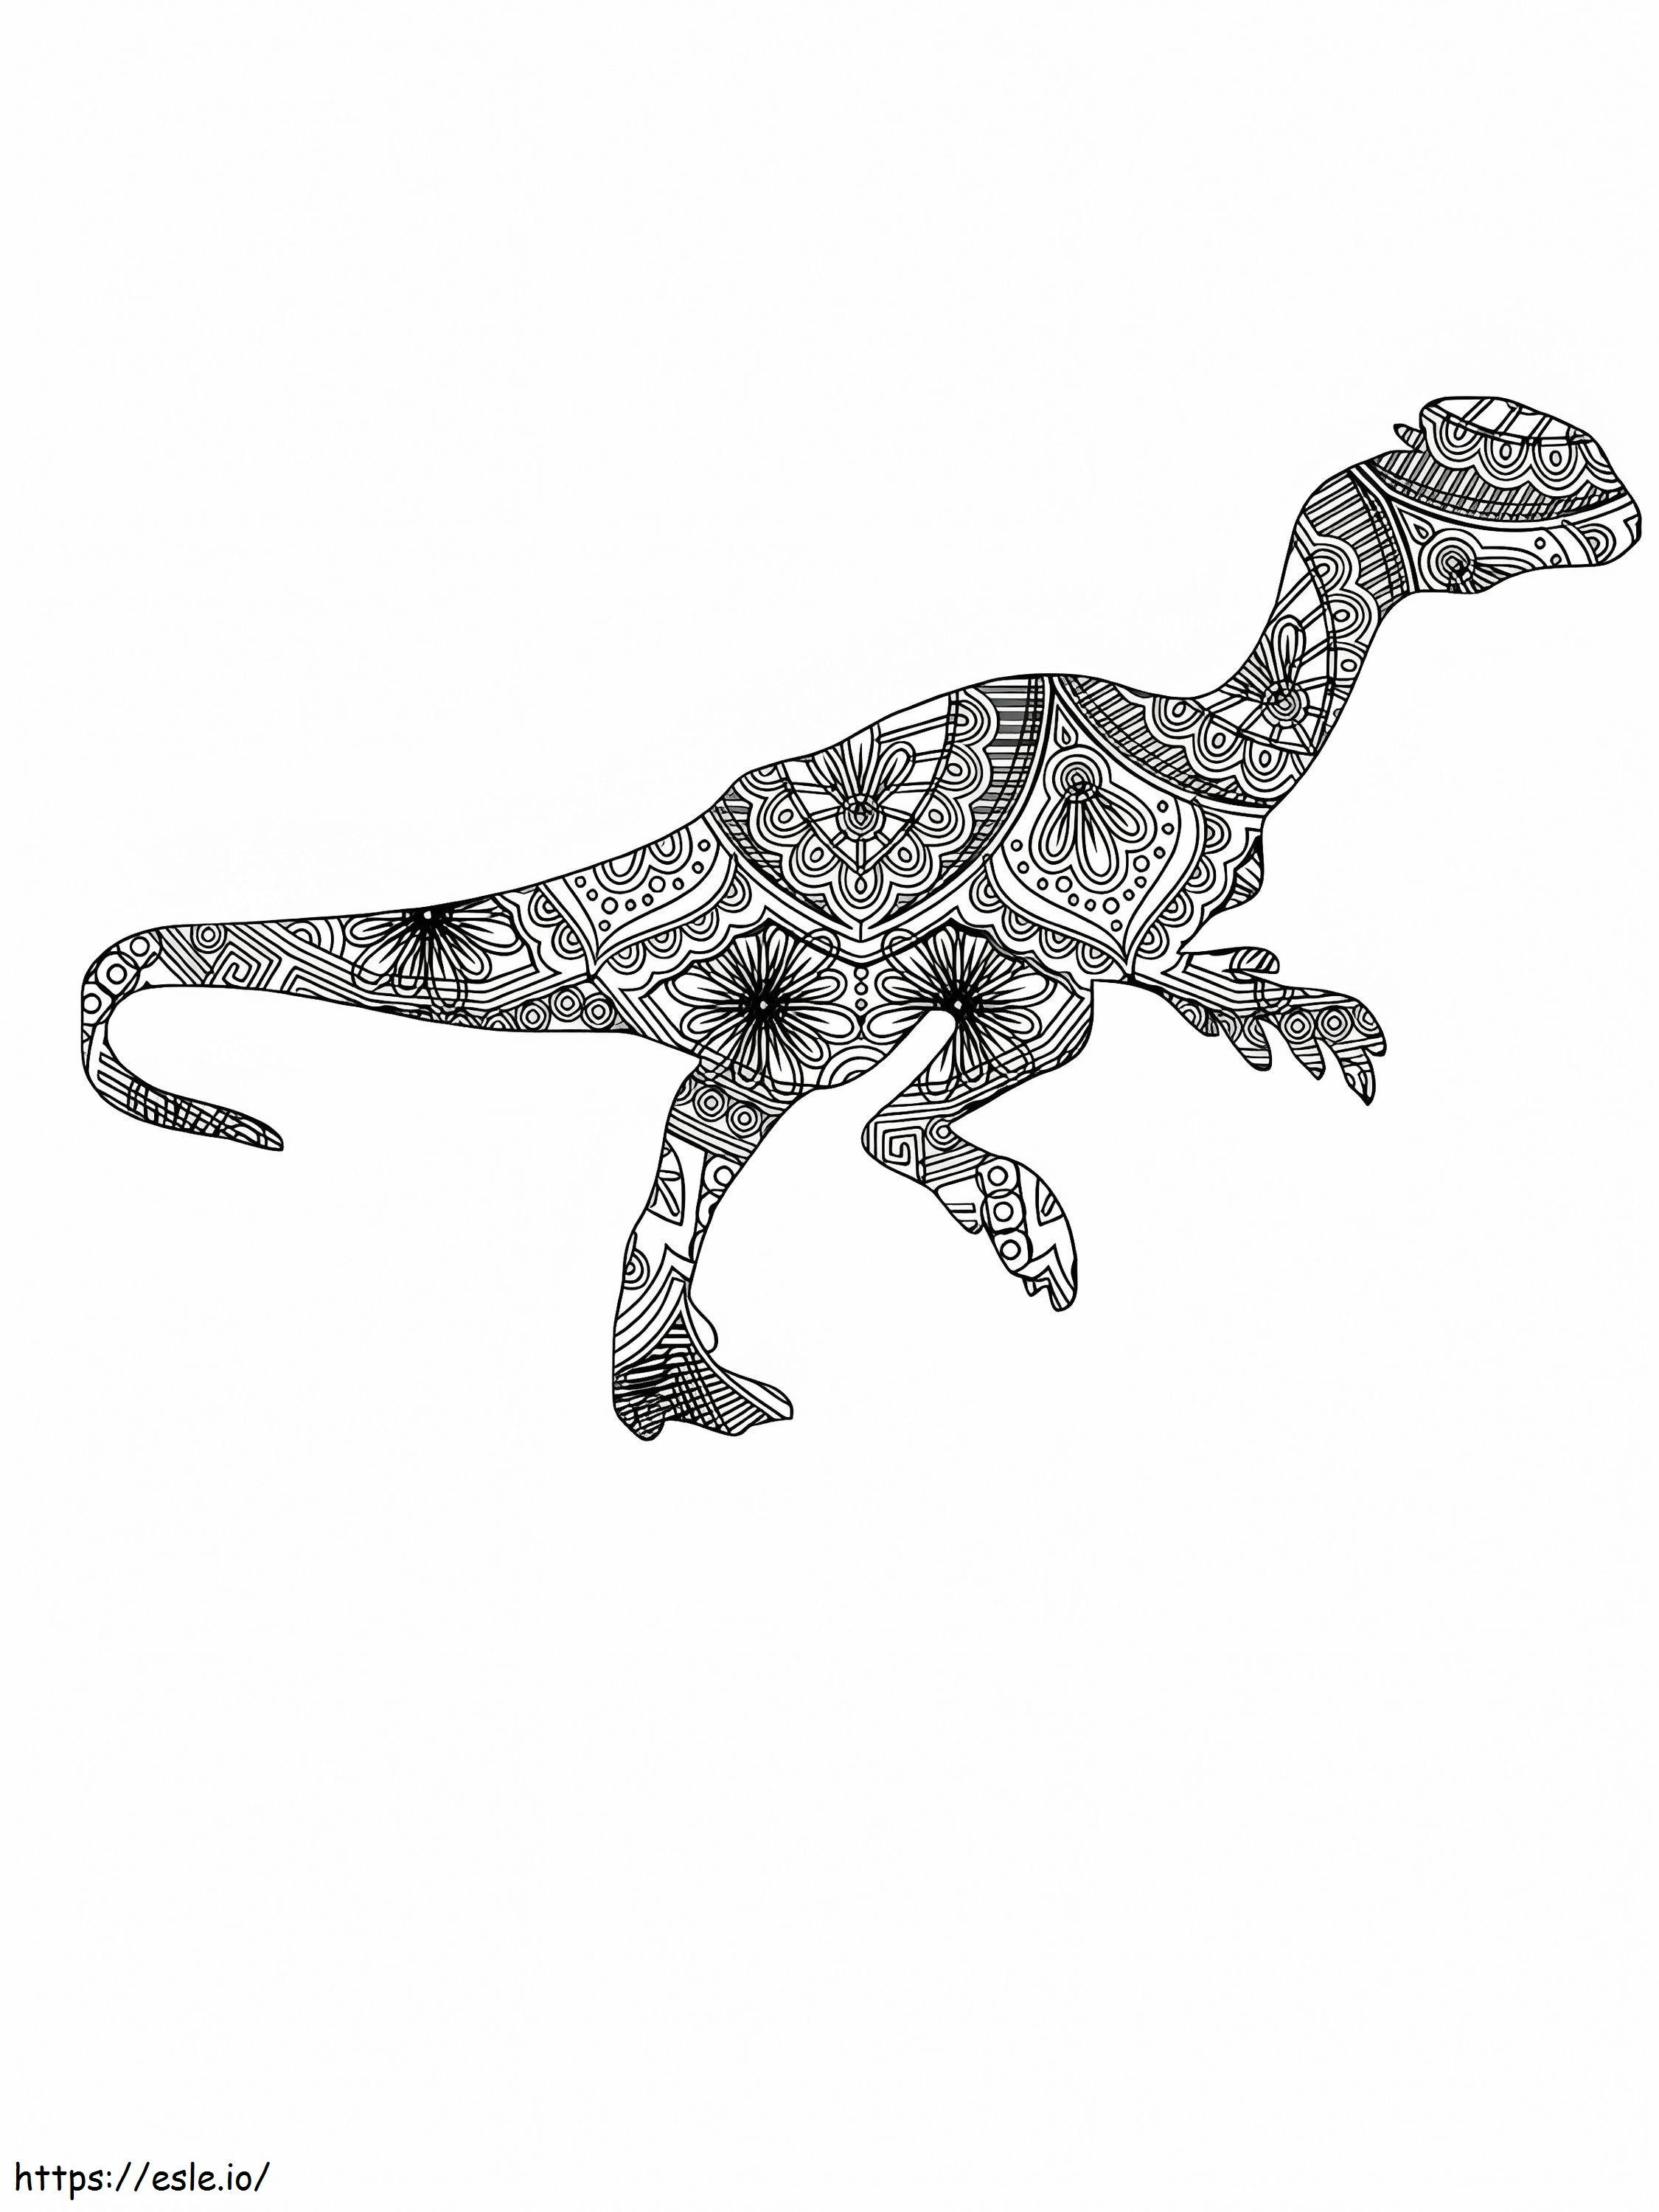 Walking Dinosaur Alebrijes coloring page